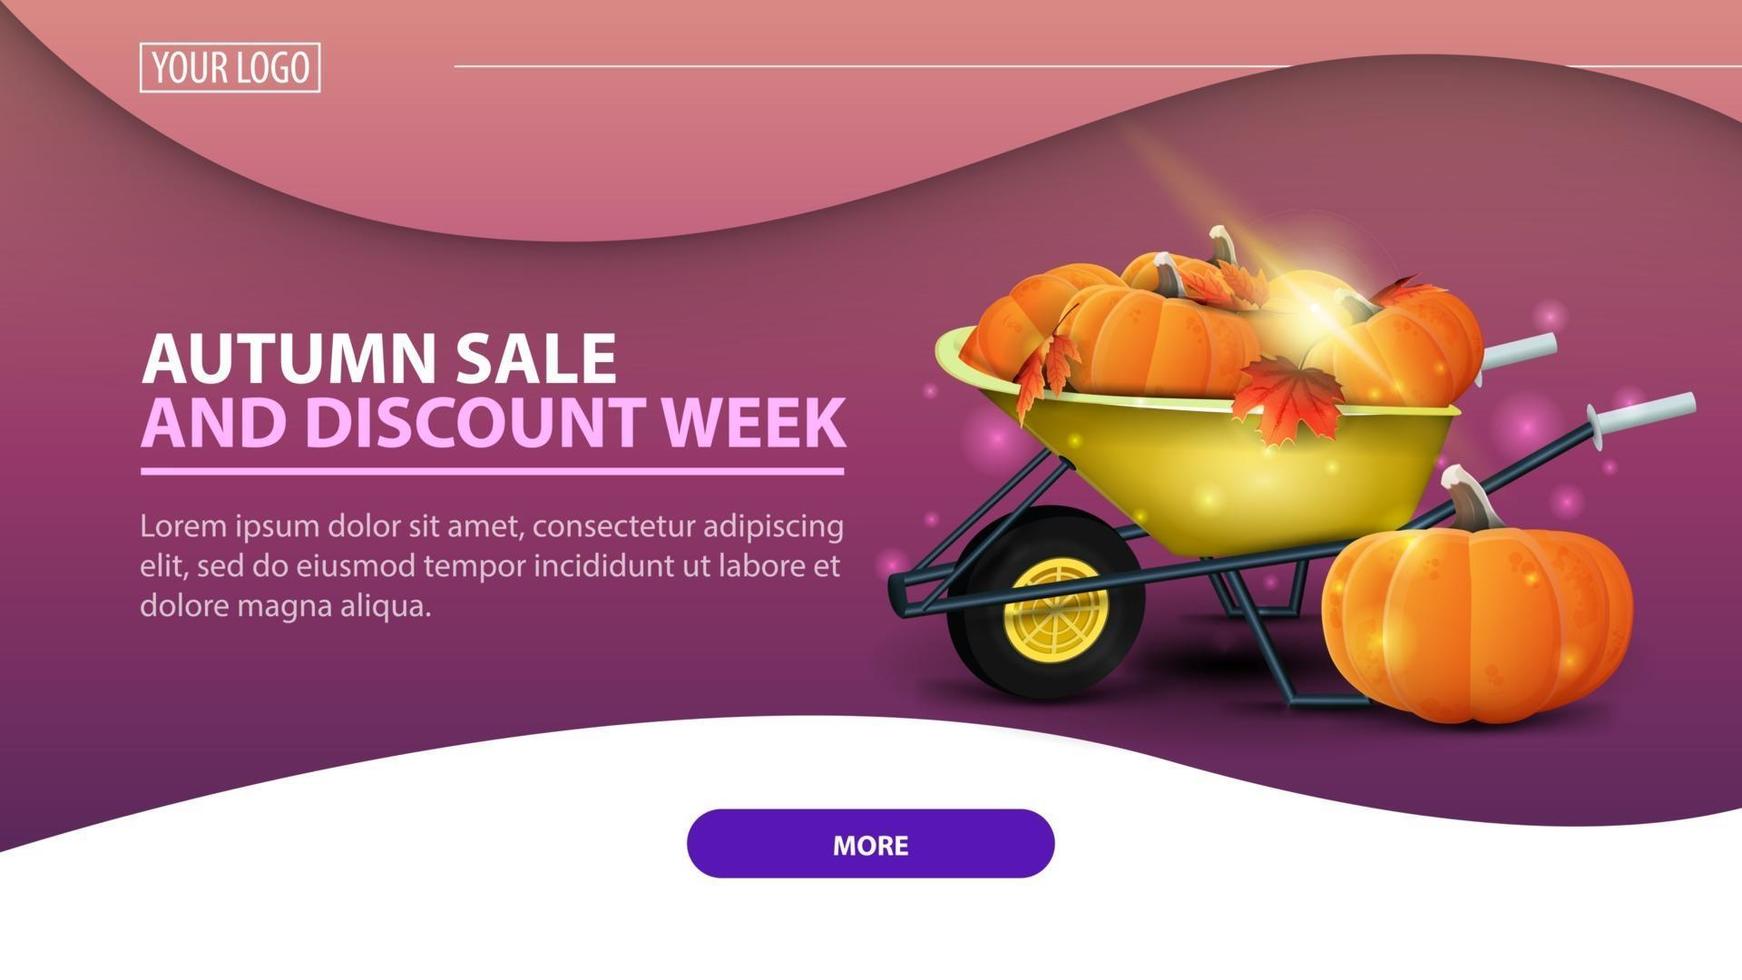 Autumn sale and discount week, web banner with garden wheelbarrow vector